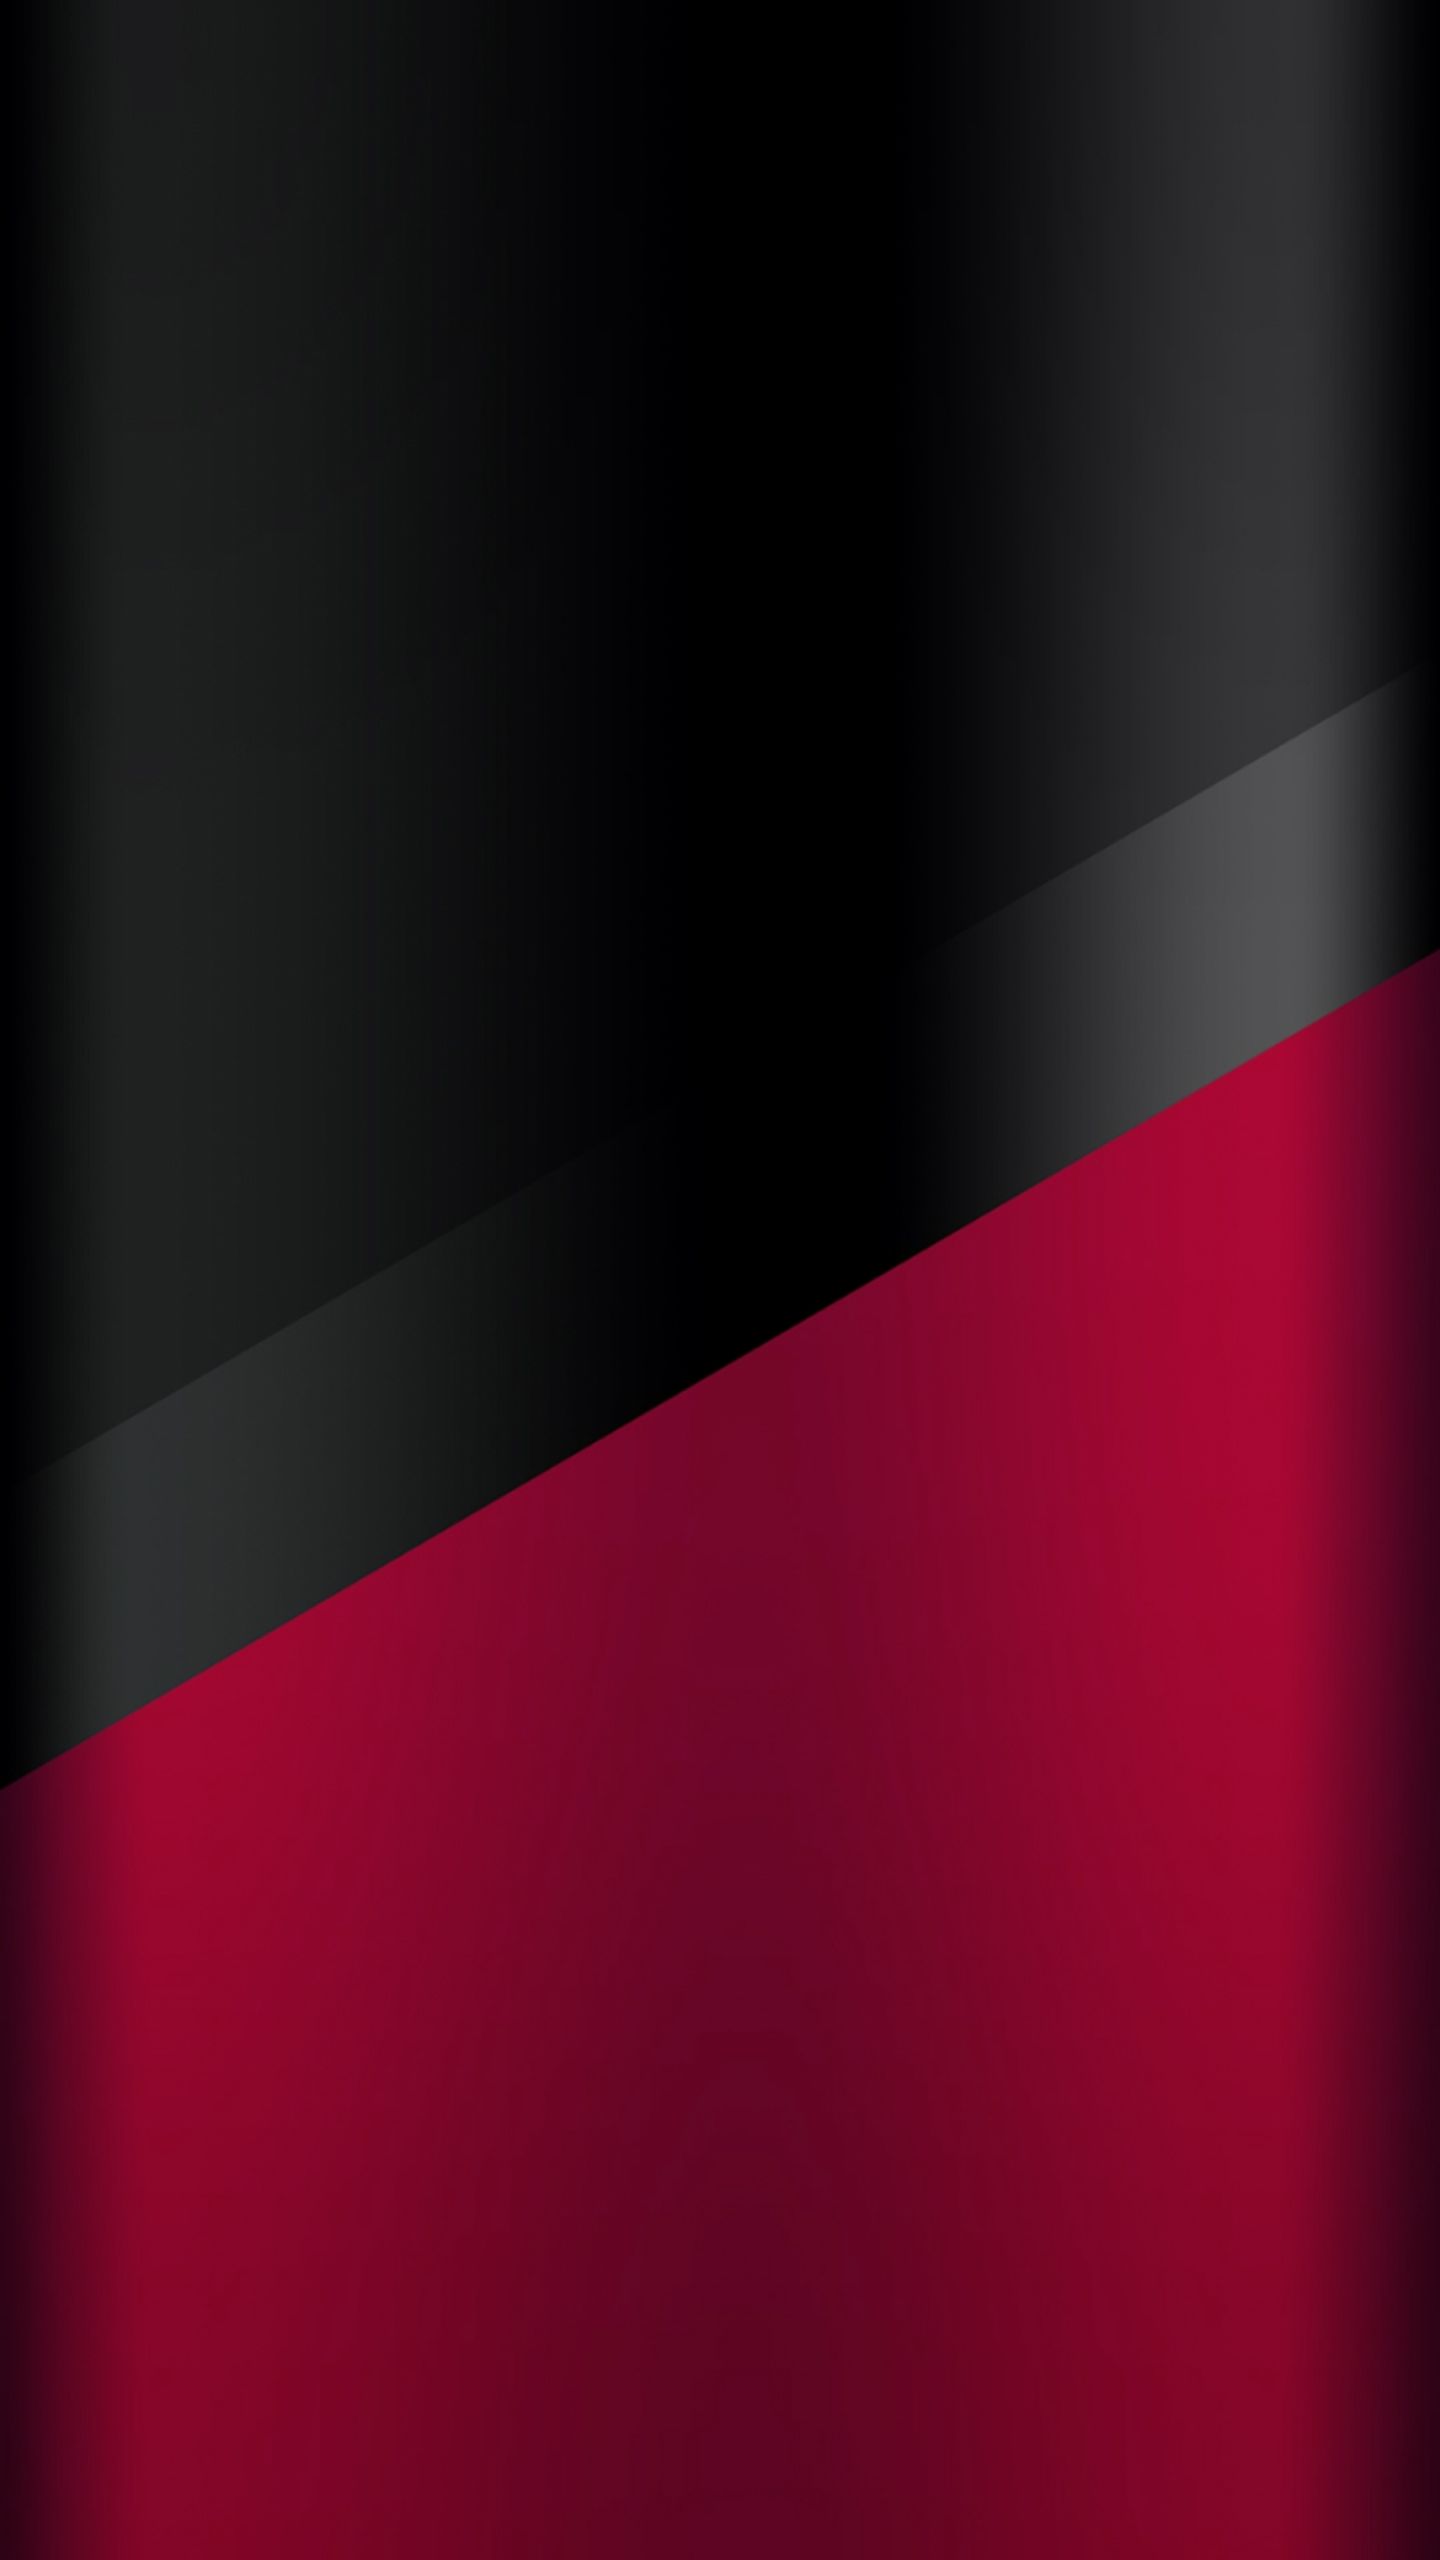 Dark S7 Edge Wallpaper 03 and Red Wallpaper. Wallpaper Download. High Resolution Wallpaper. Samsung wallpaper, Samsung galaxy wallpaper, Red colour wallpaper